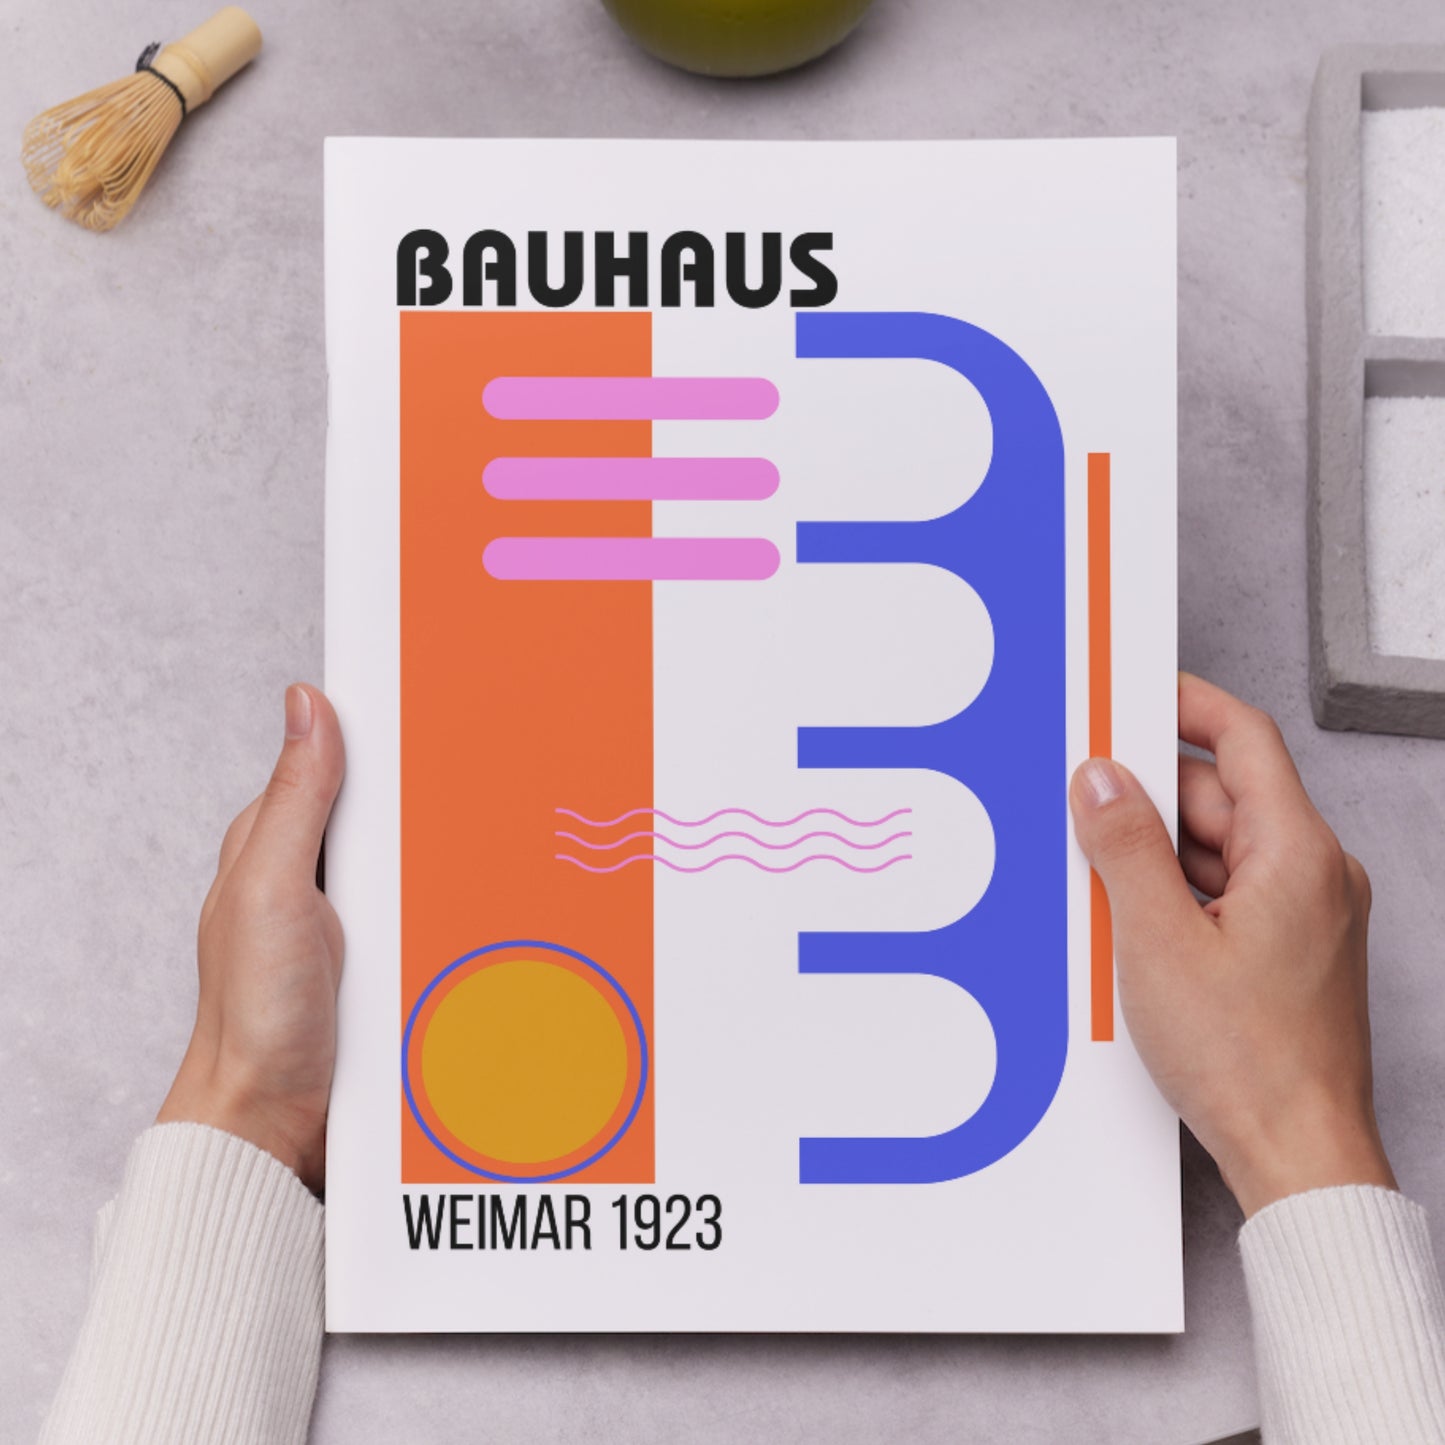 Bauhaus Exhibition Art Print, A3/A4/A5 Sizes